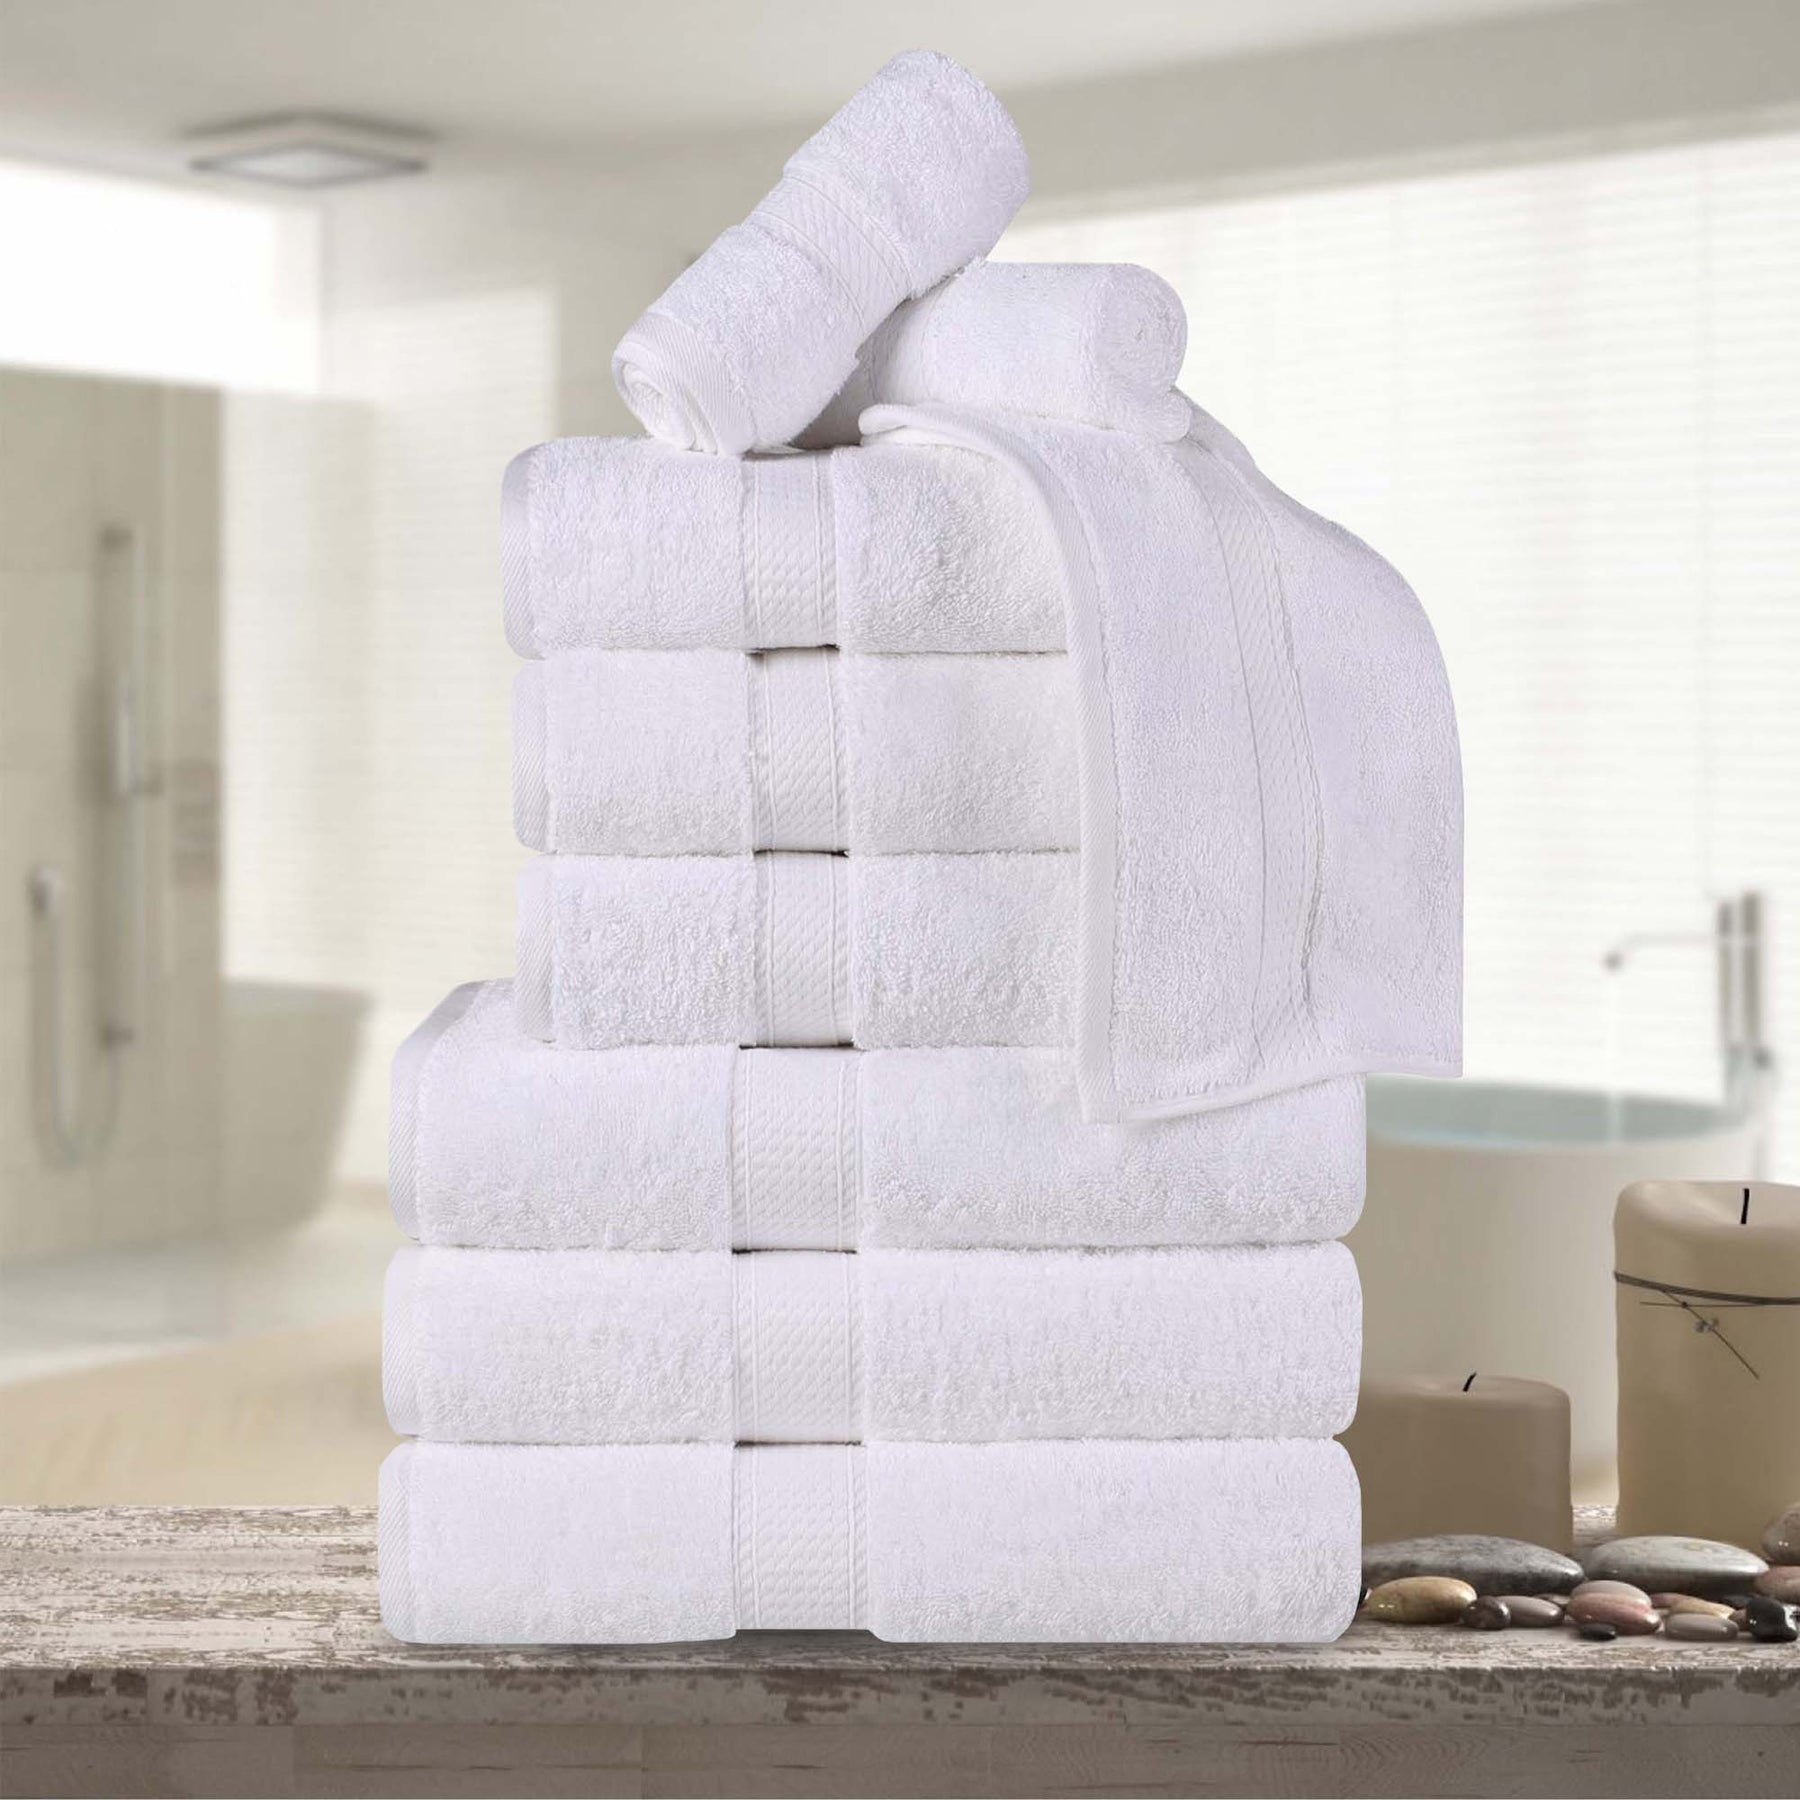 Superior Egyptian Cotton Plush Heavyweight Absorbent Luxury Soft 9-Piece Towel Set - White